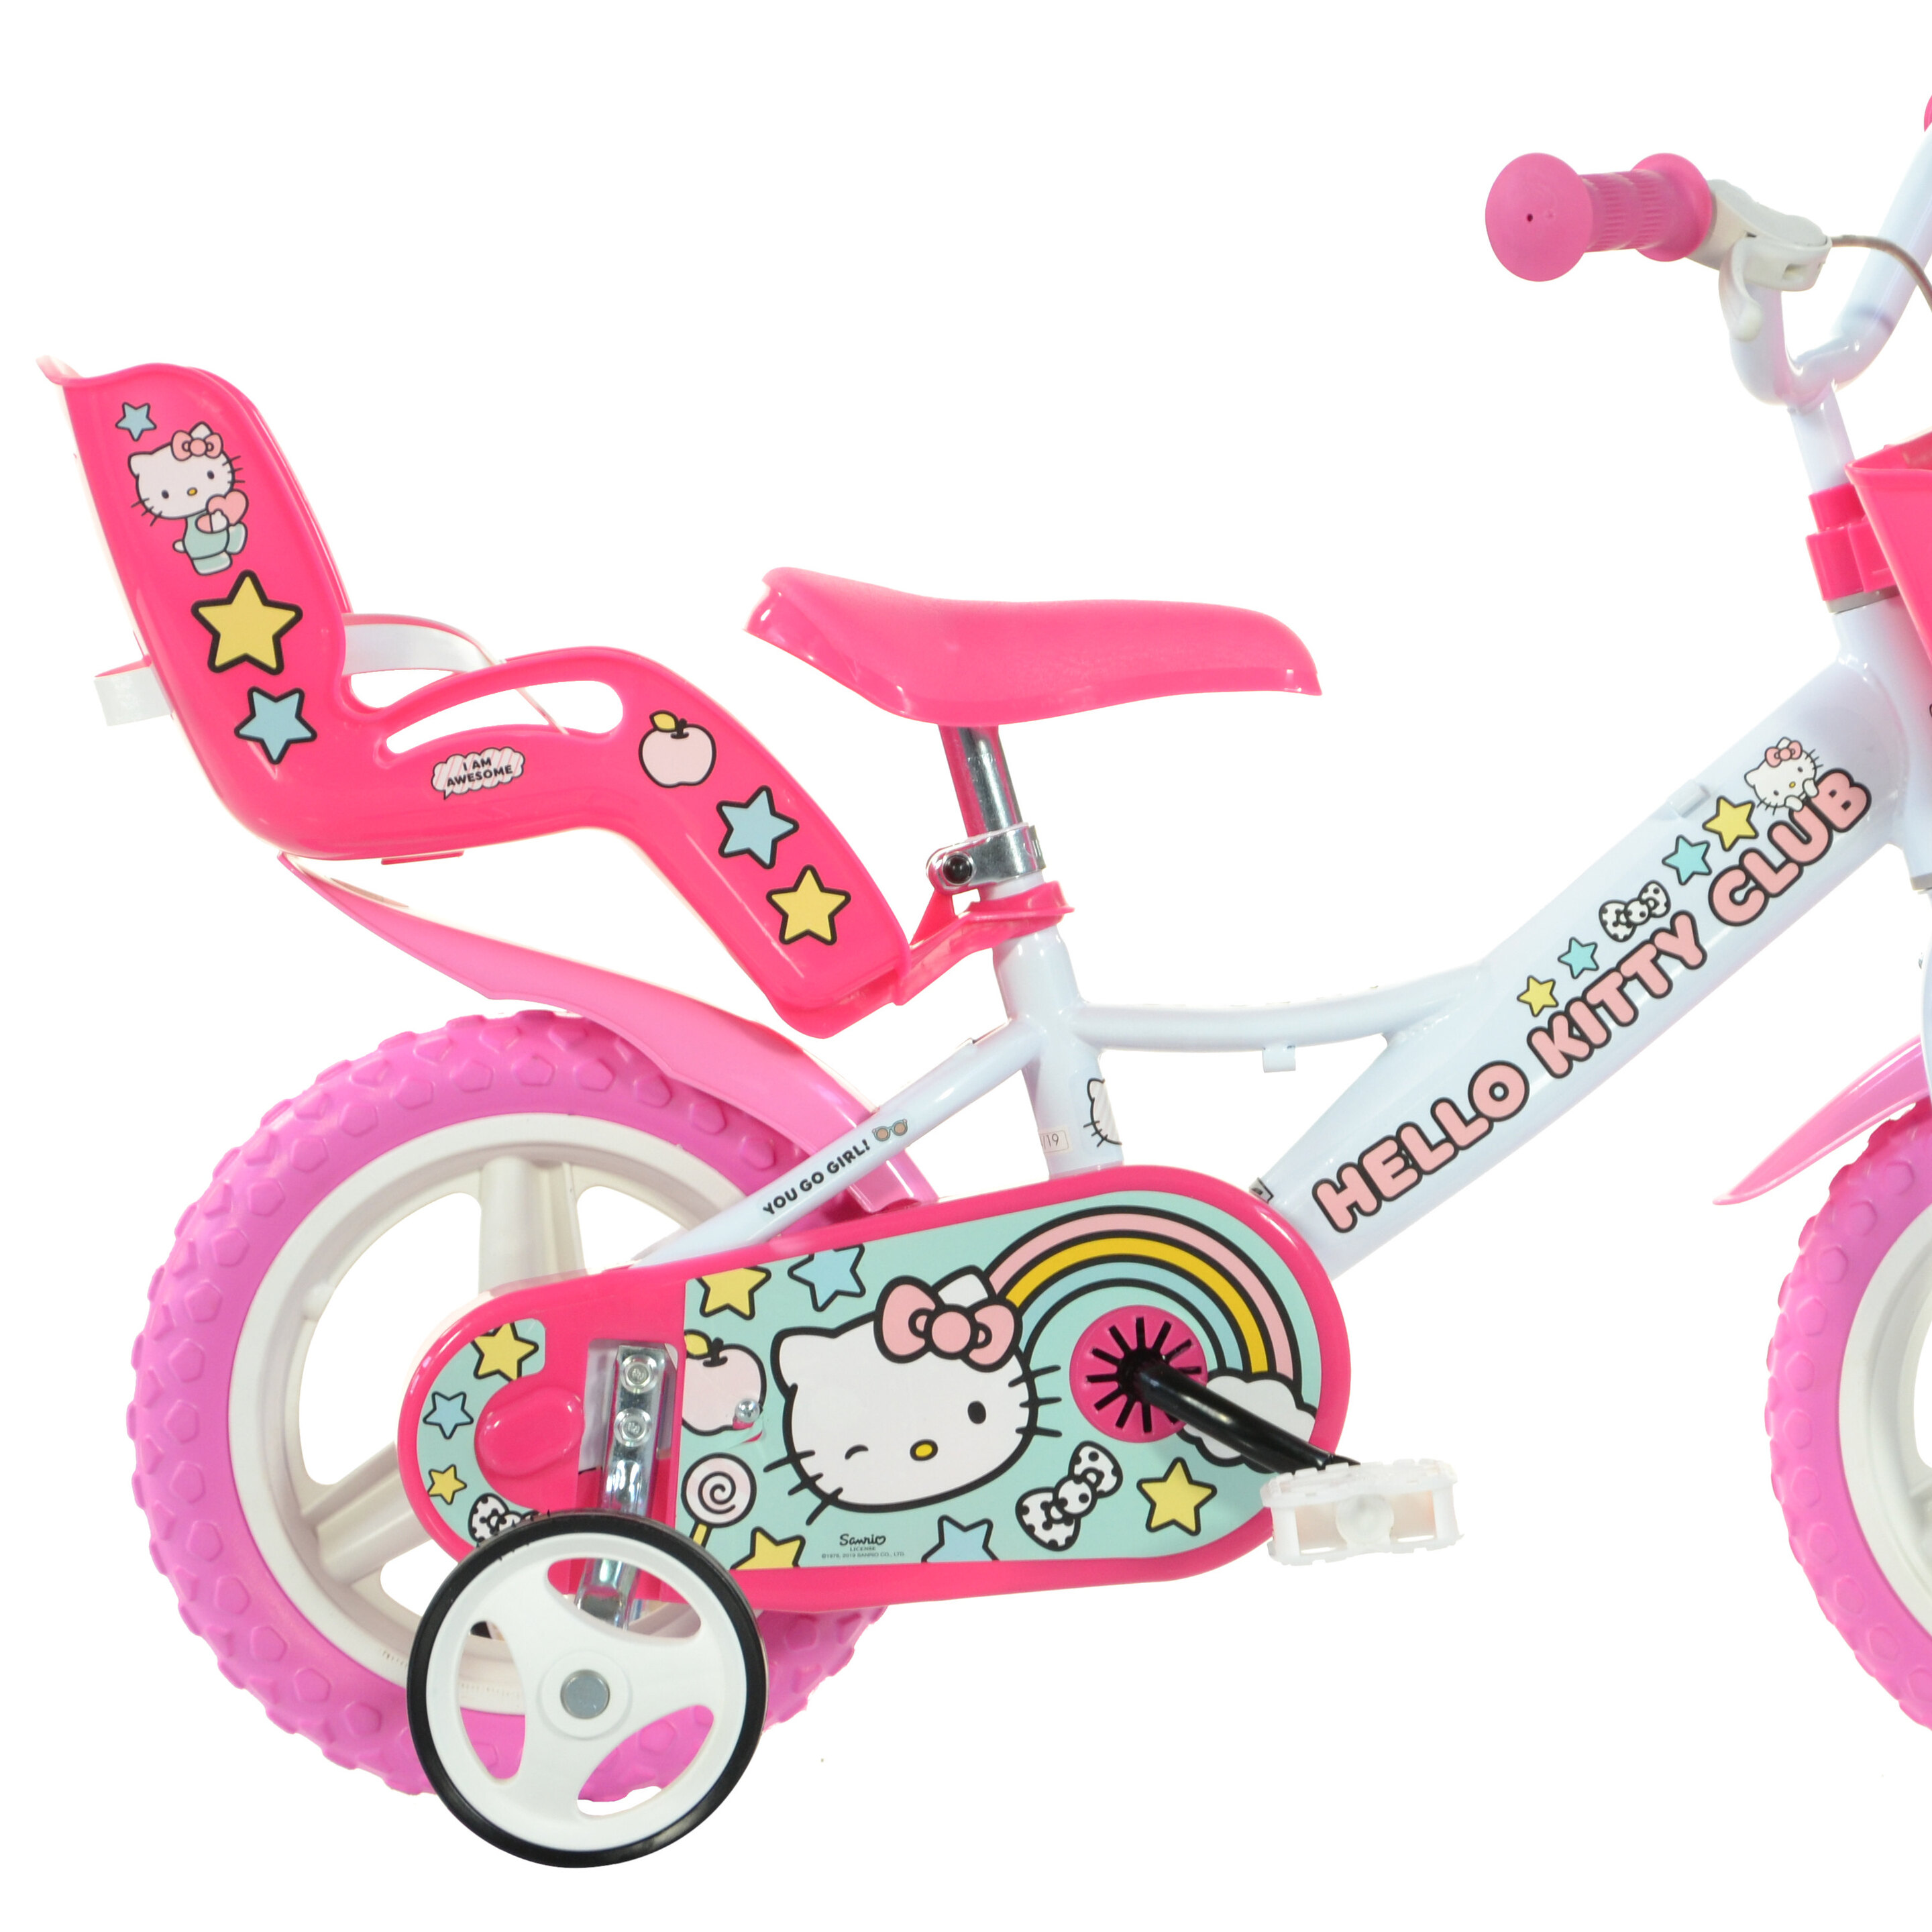 Bicicleta Infantil Hello Kitty 12 Pulgadas - Rosa  MKP